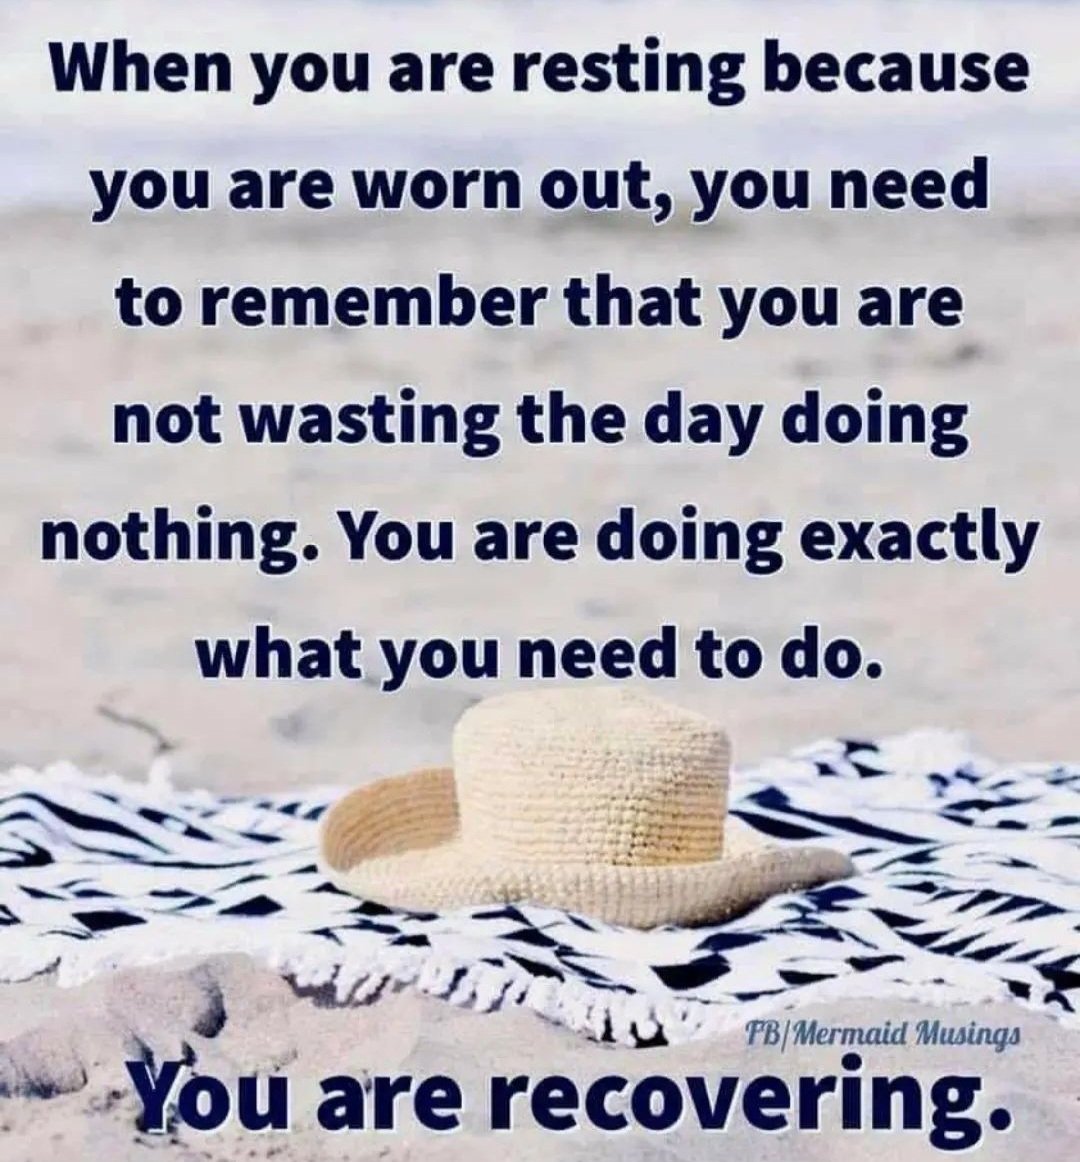 Resting is recovering...#restdaysmatter
#restwhenyouneedto #takecareofyourself
#paceyourself #dontoverdoit
#giveyourselfabreak #letyourbodyheal
#fibromyalgia #CFSME
#fibrosupportbymonica